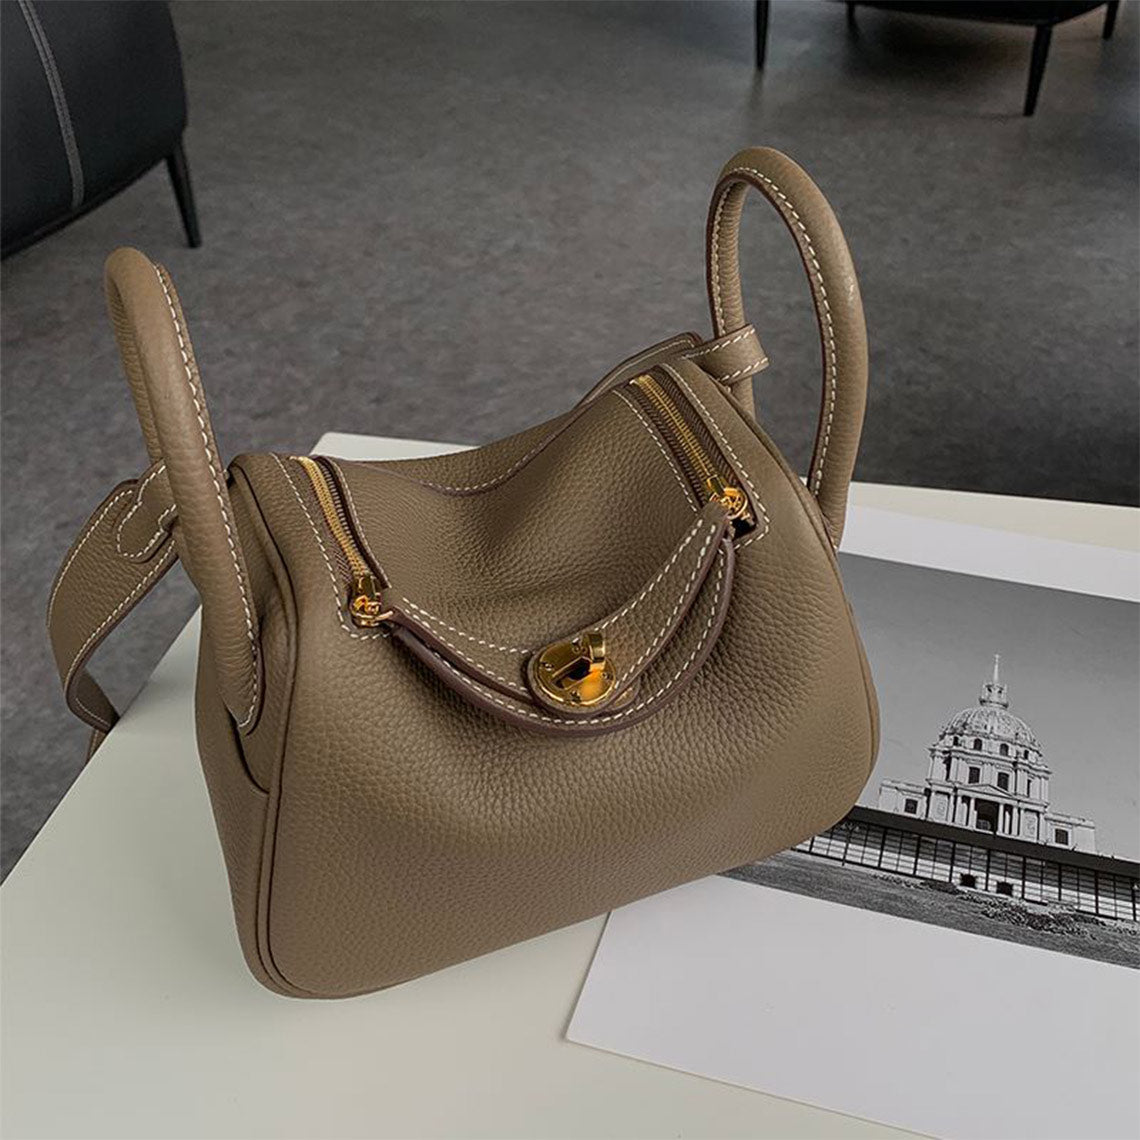 Top Gain Leather Handbag | Top Handles Handbag for Women - POPSEWING™